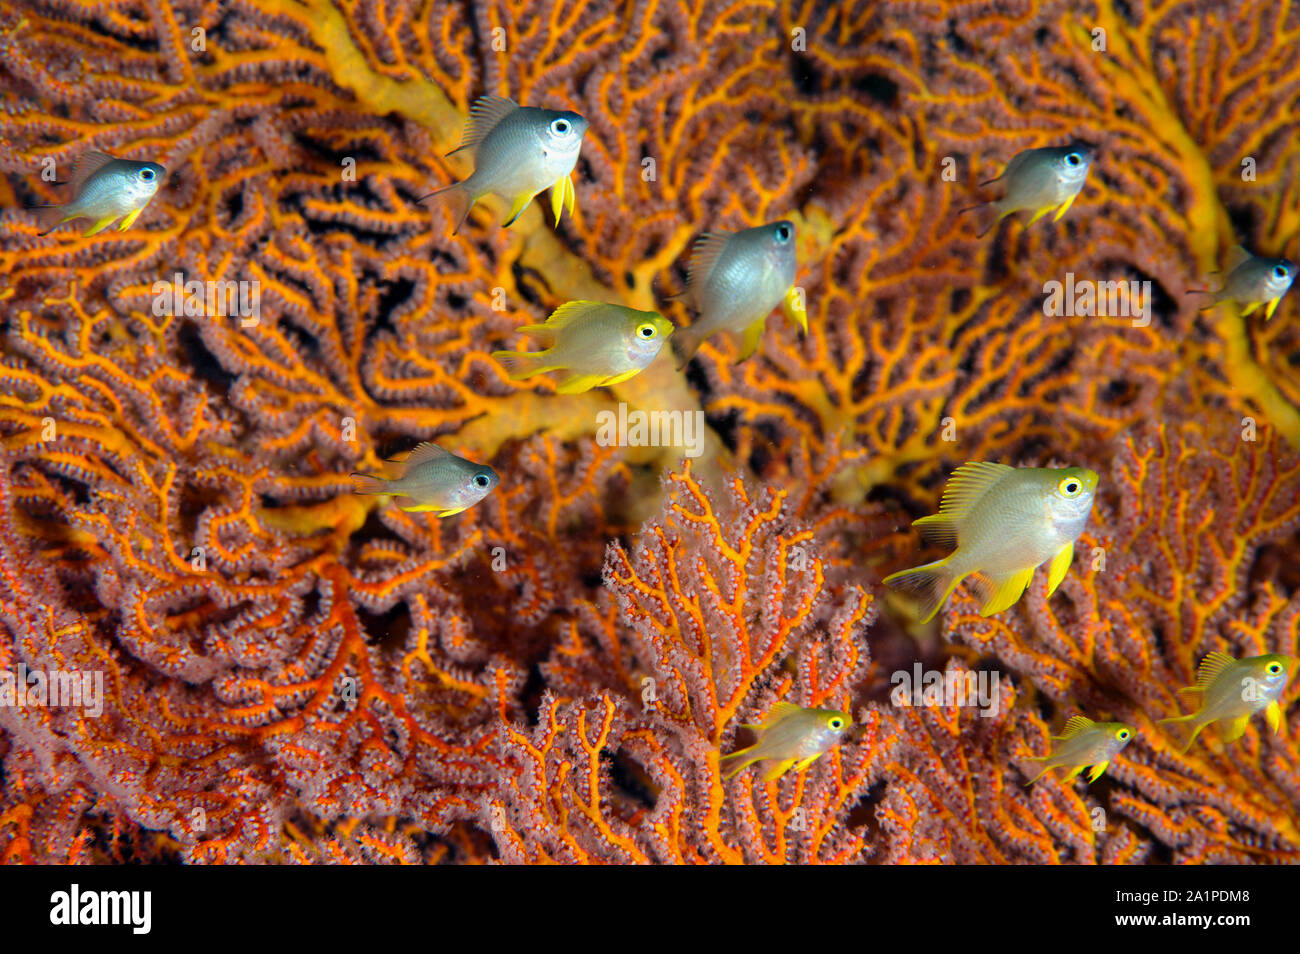 Juvenile golden damsels, Amblyglyphidodon aereus, shelterin around a sea fan Sulawesi Indonesia. Stock Photo